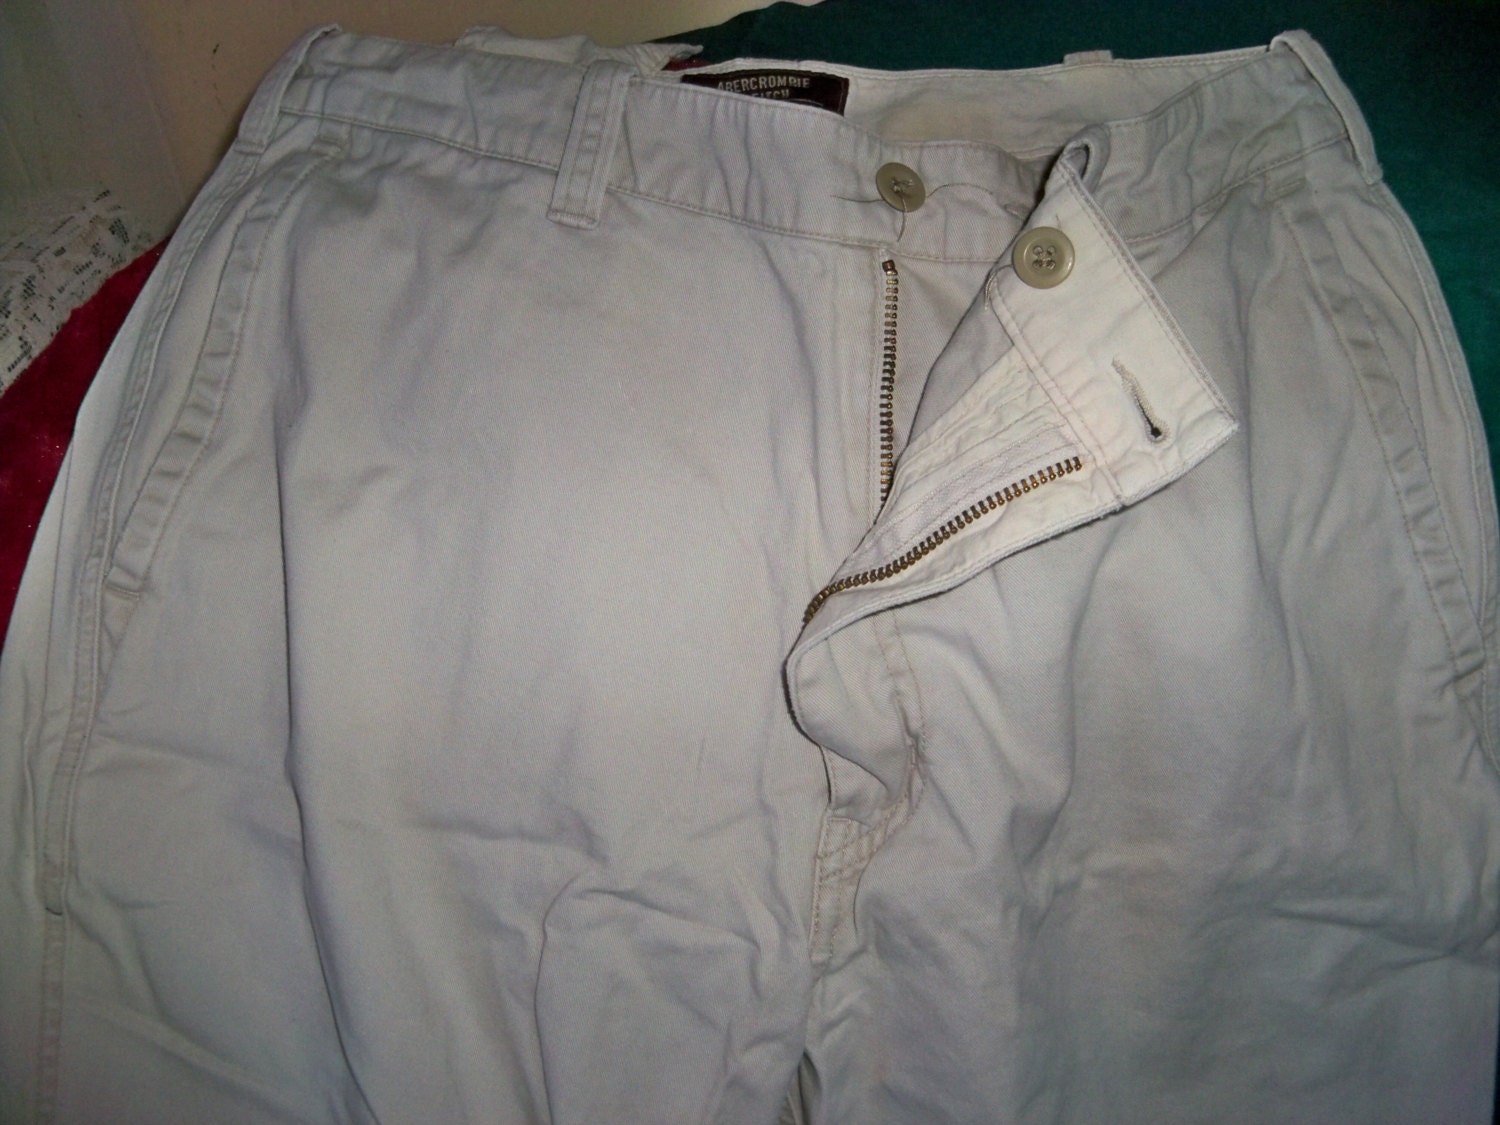 Mens Pants Khaki. Colored Pants Cream Pants by VintageJB on Etsy